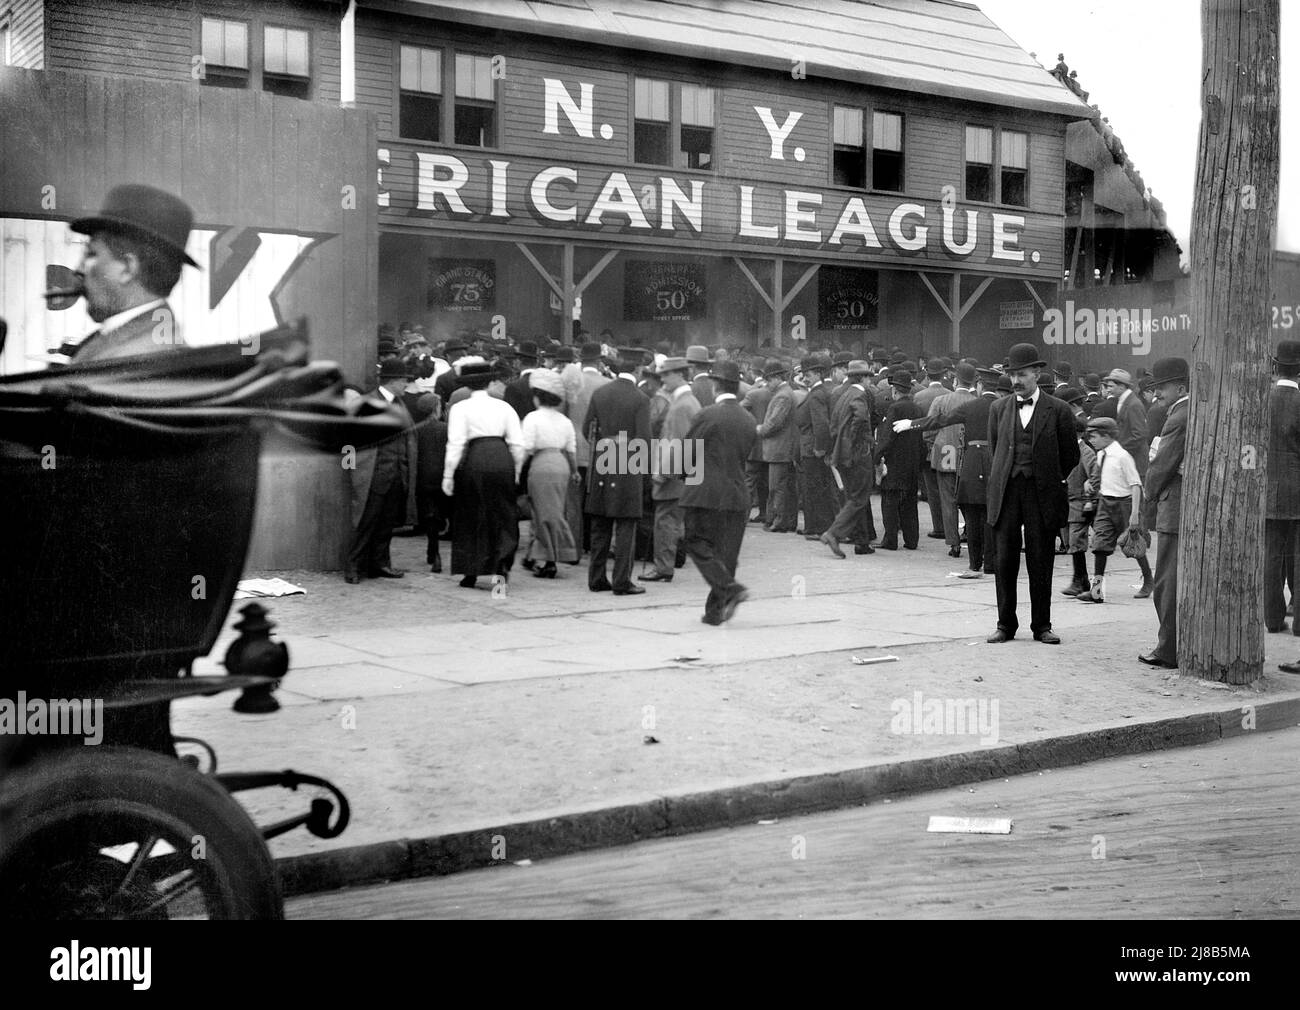 Spectators at Entrance to Hilltop Park aka American League Park, home of the New York Highlanders baseball team, New York City, New York, USA, Bain News Service, 1912 Stock Photo